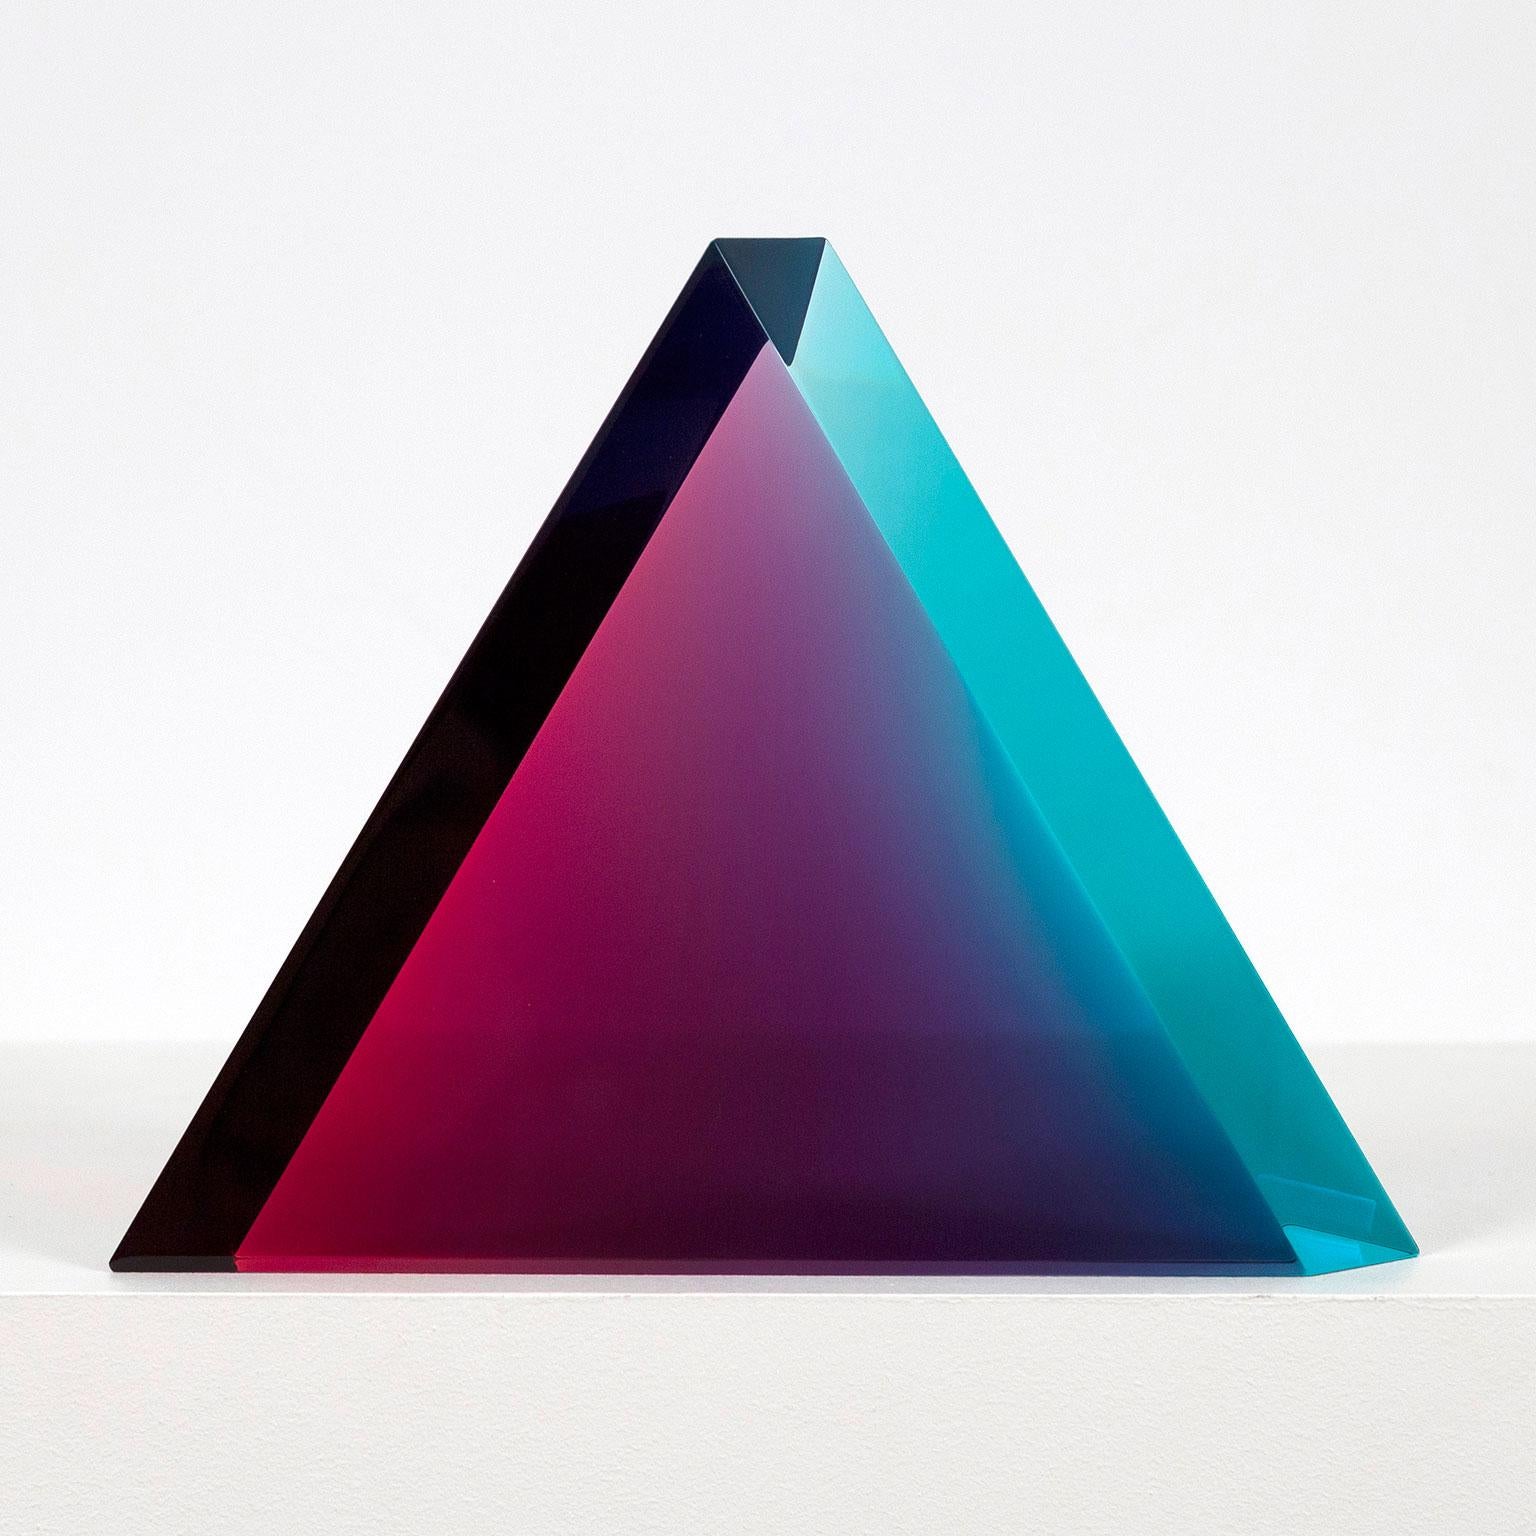 Vasa Velizar Mihich Abstract Sculpture - Vasa Mihich "Aqua Berry" Triangle, 2019